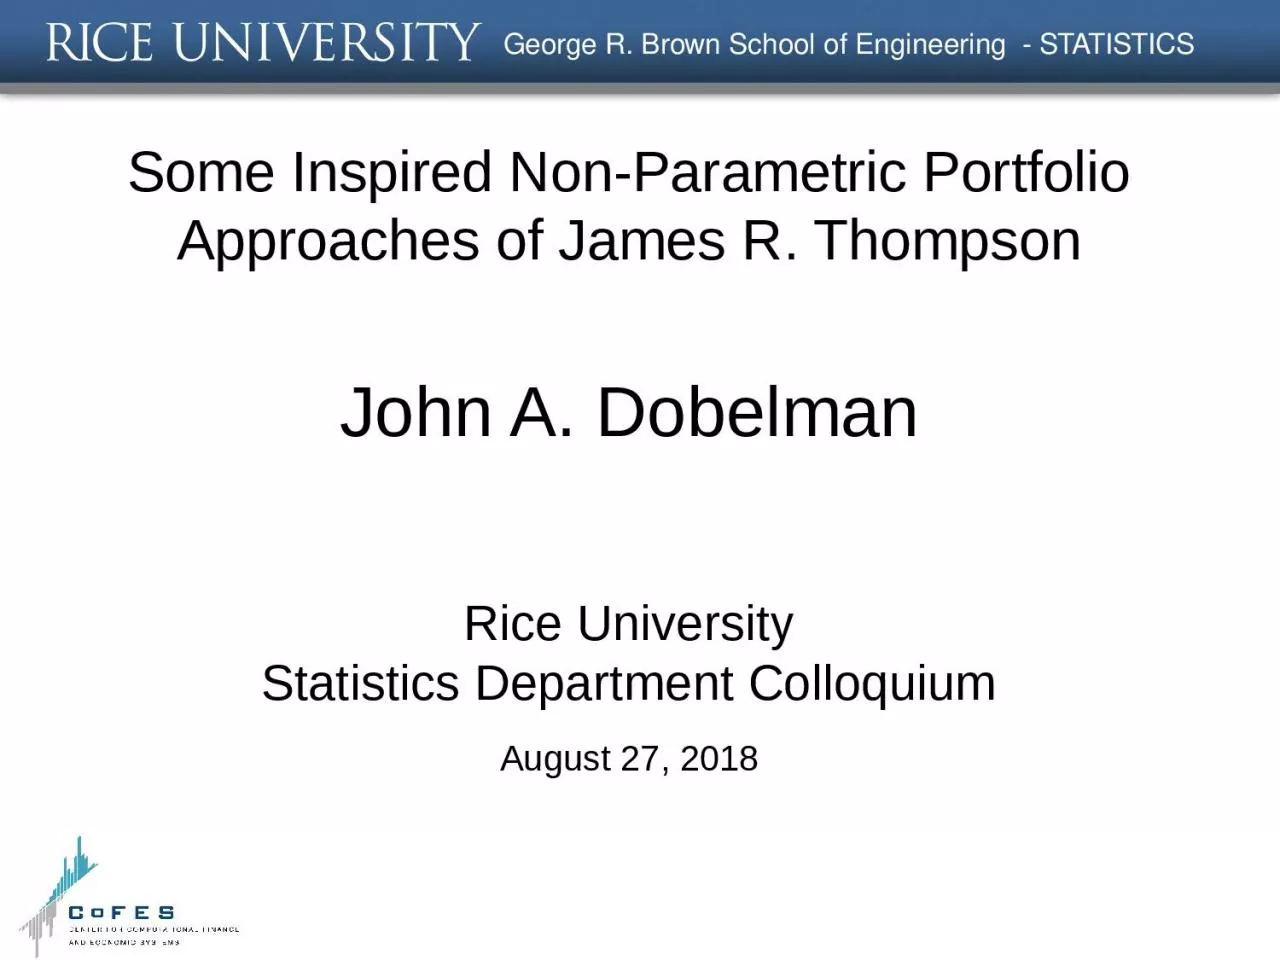 Some Inspired Non-Parametric Portfolio Approaches of James R. Thompson